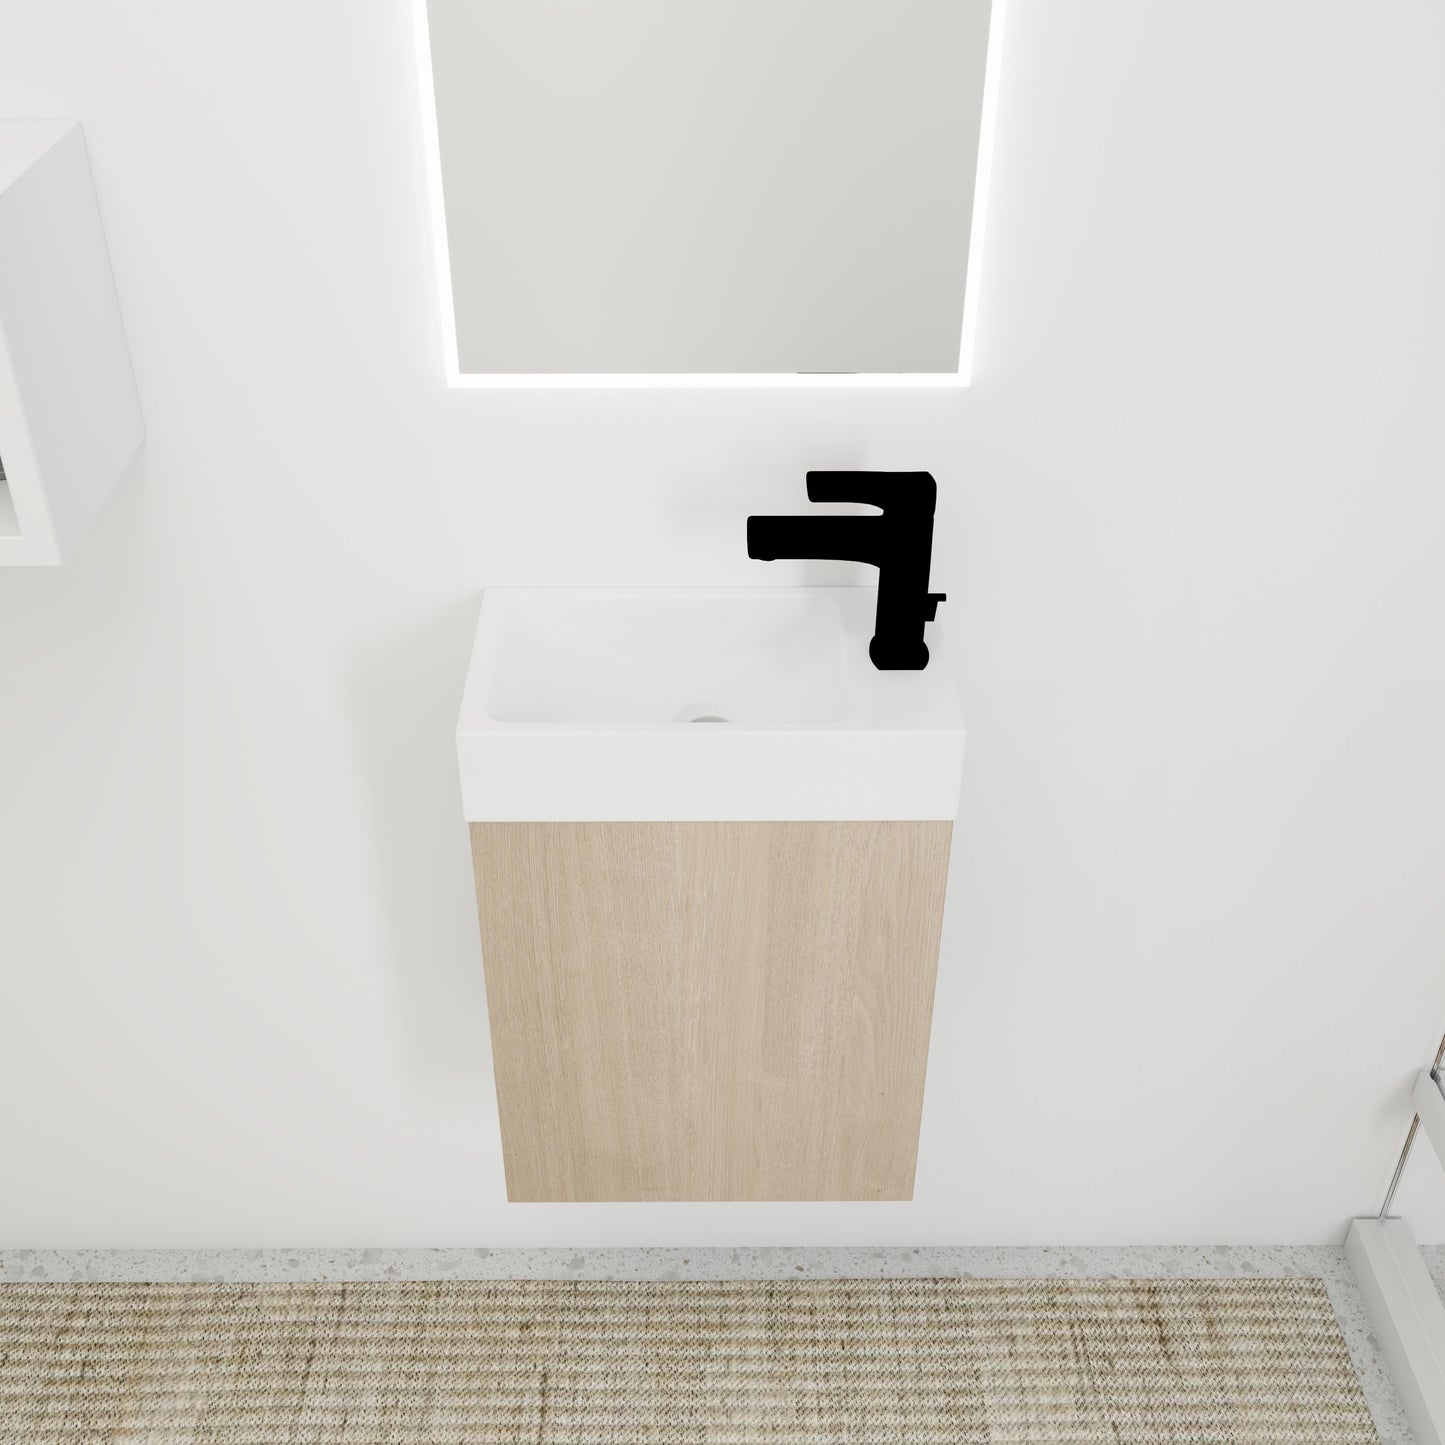 Bathroom Vanity With Single Gel Sink,Soft Close Doors,16 Inch For Small Bathroom